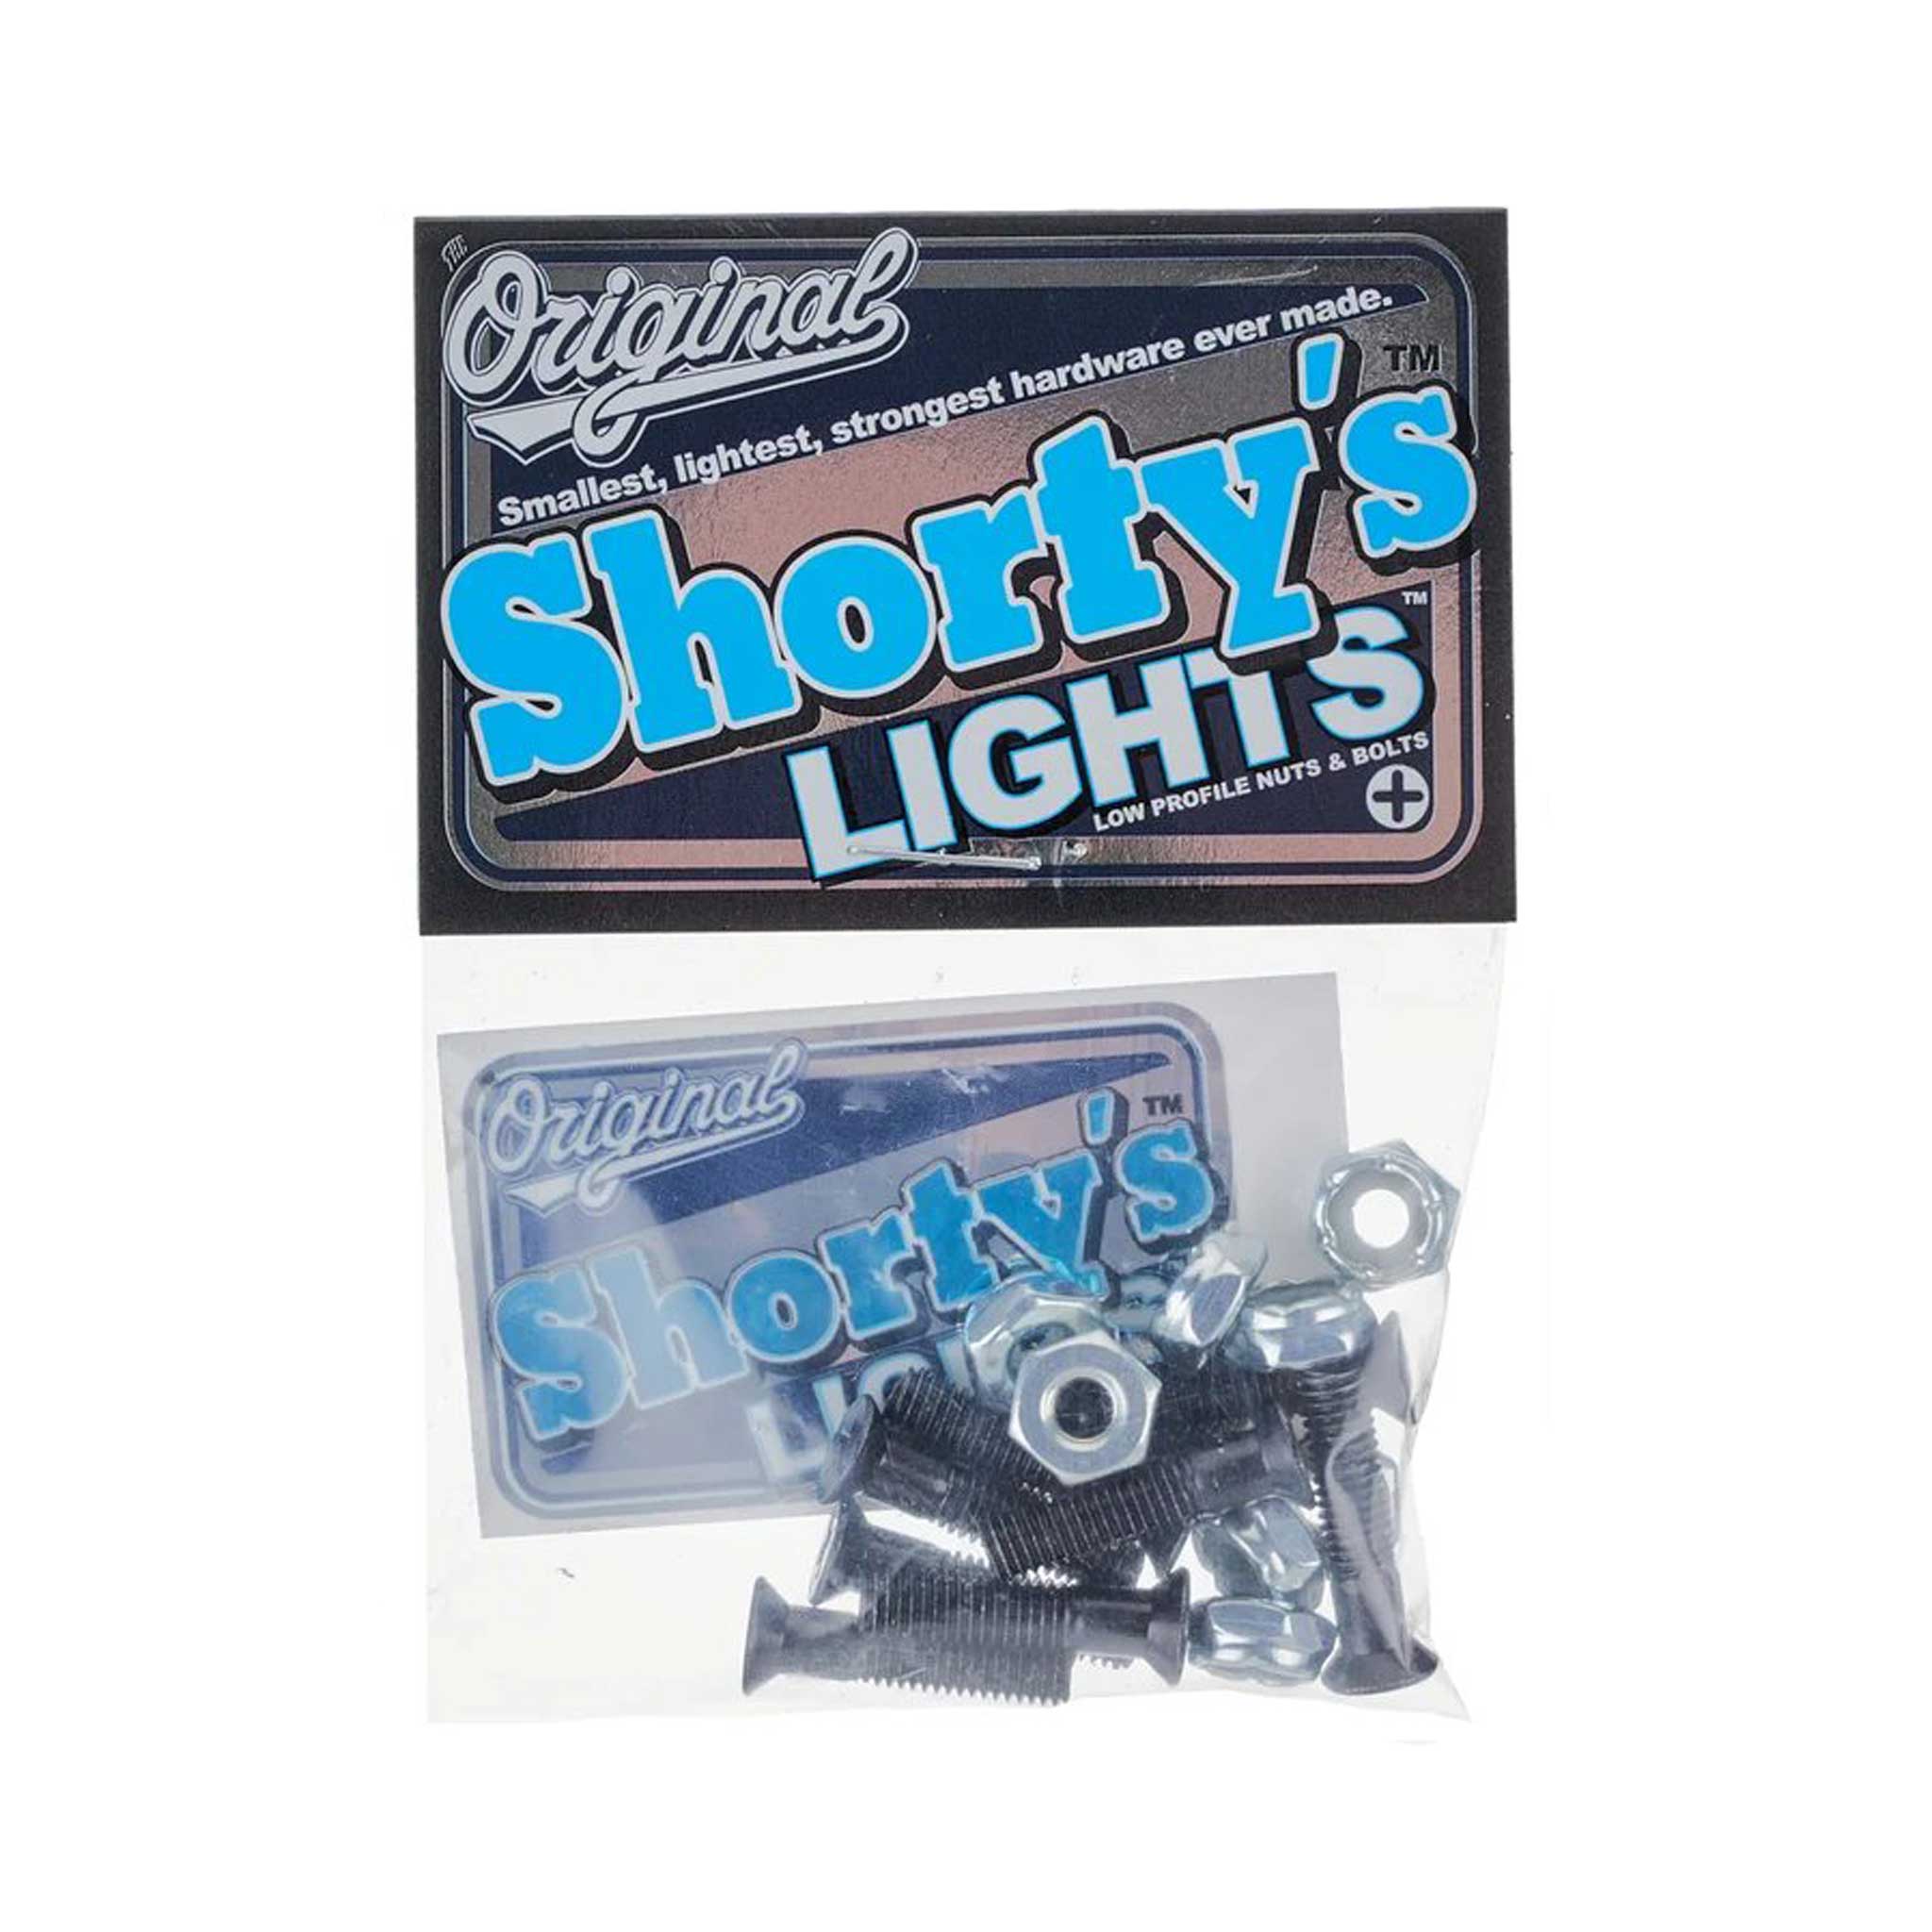 Shorty's Lights Hardware